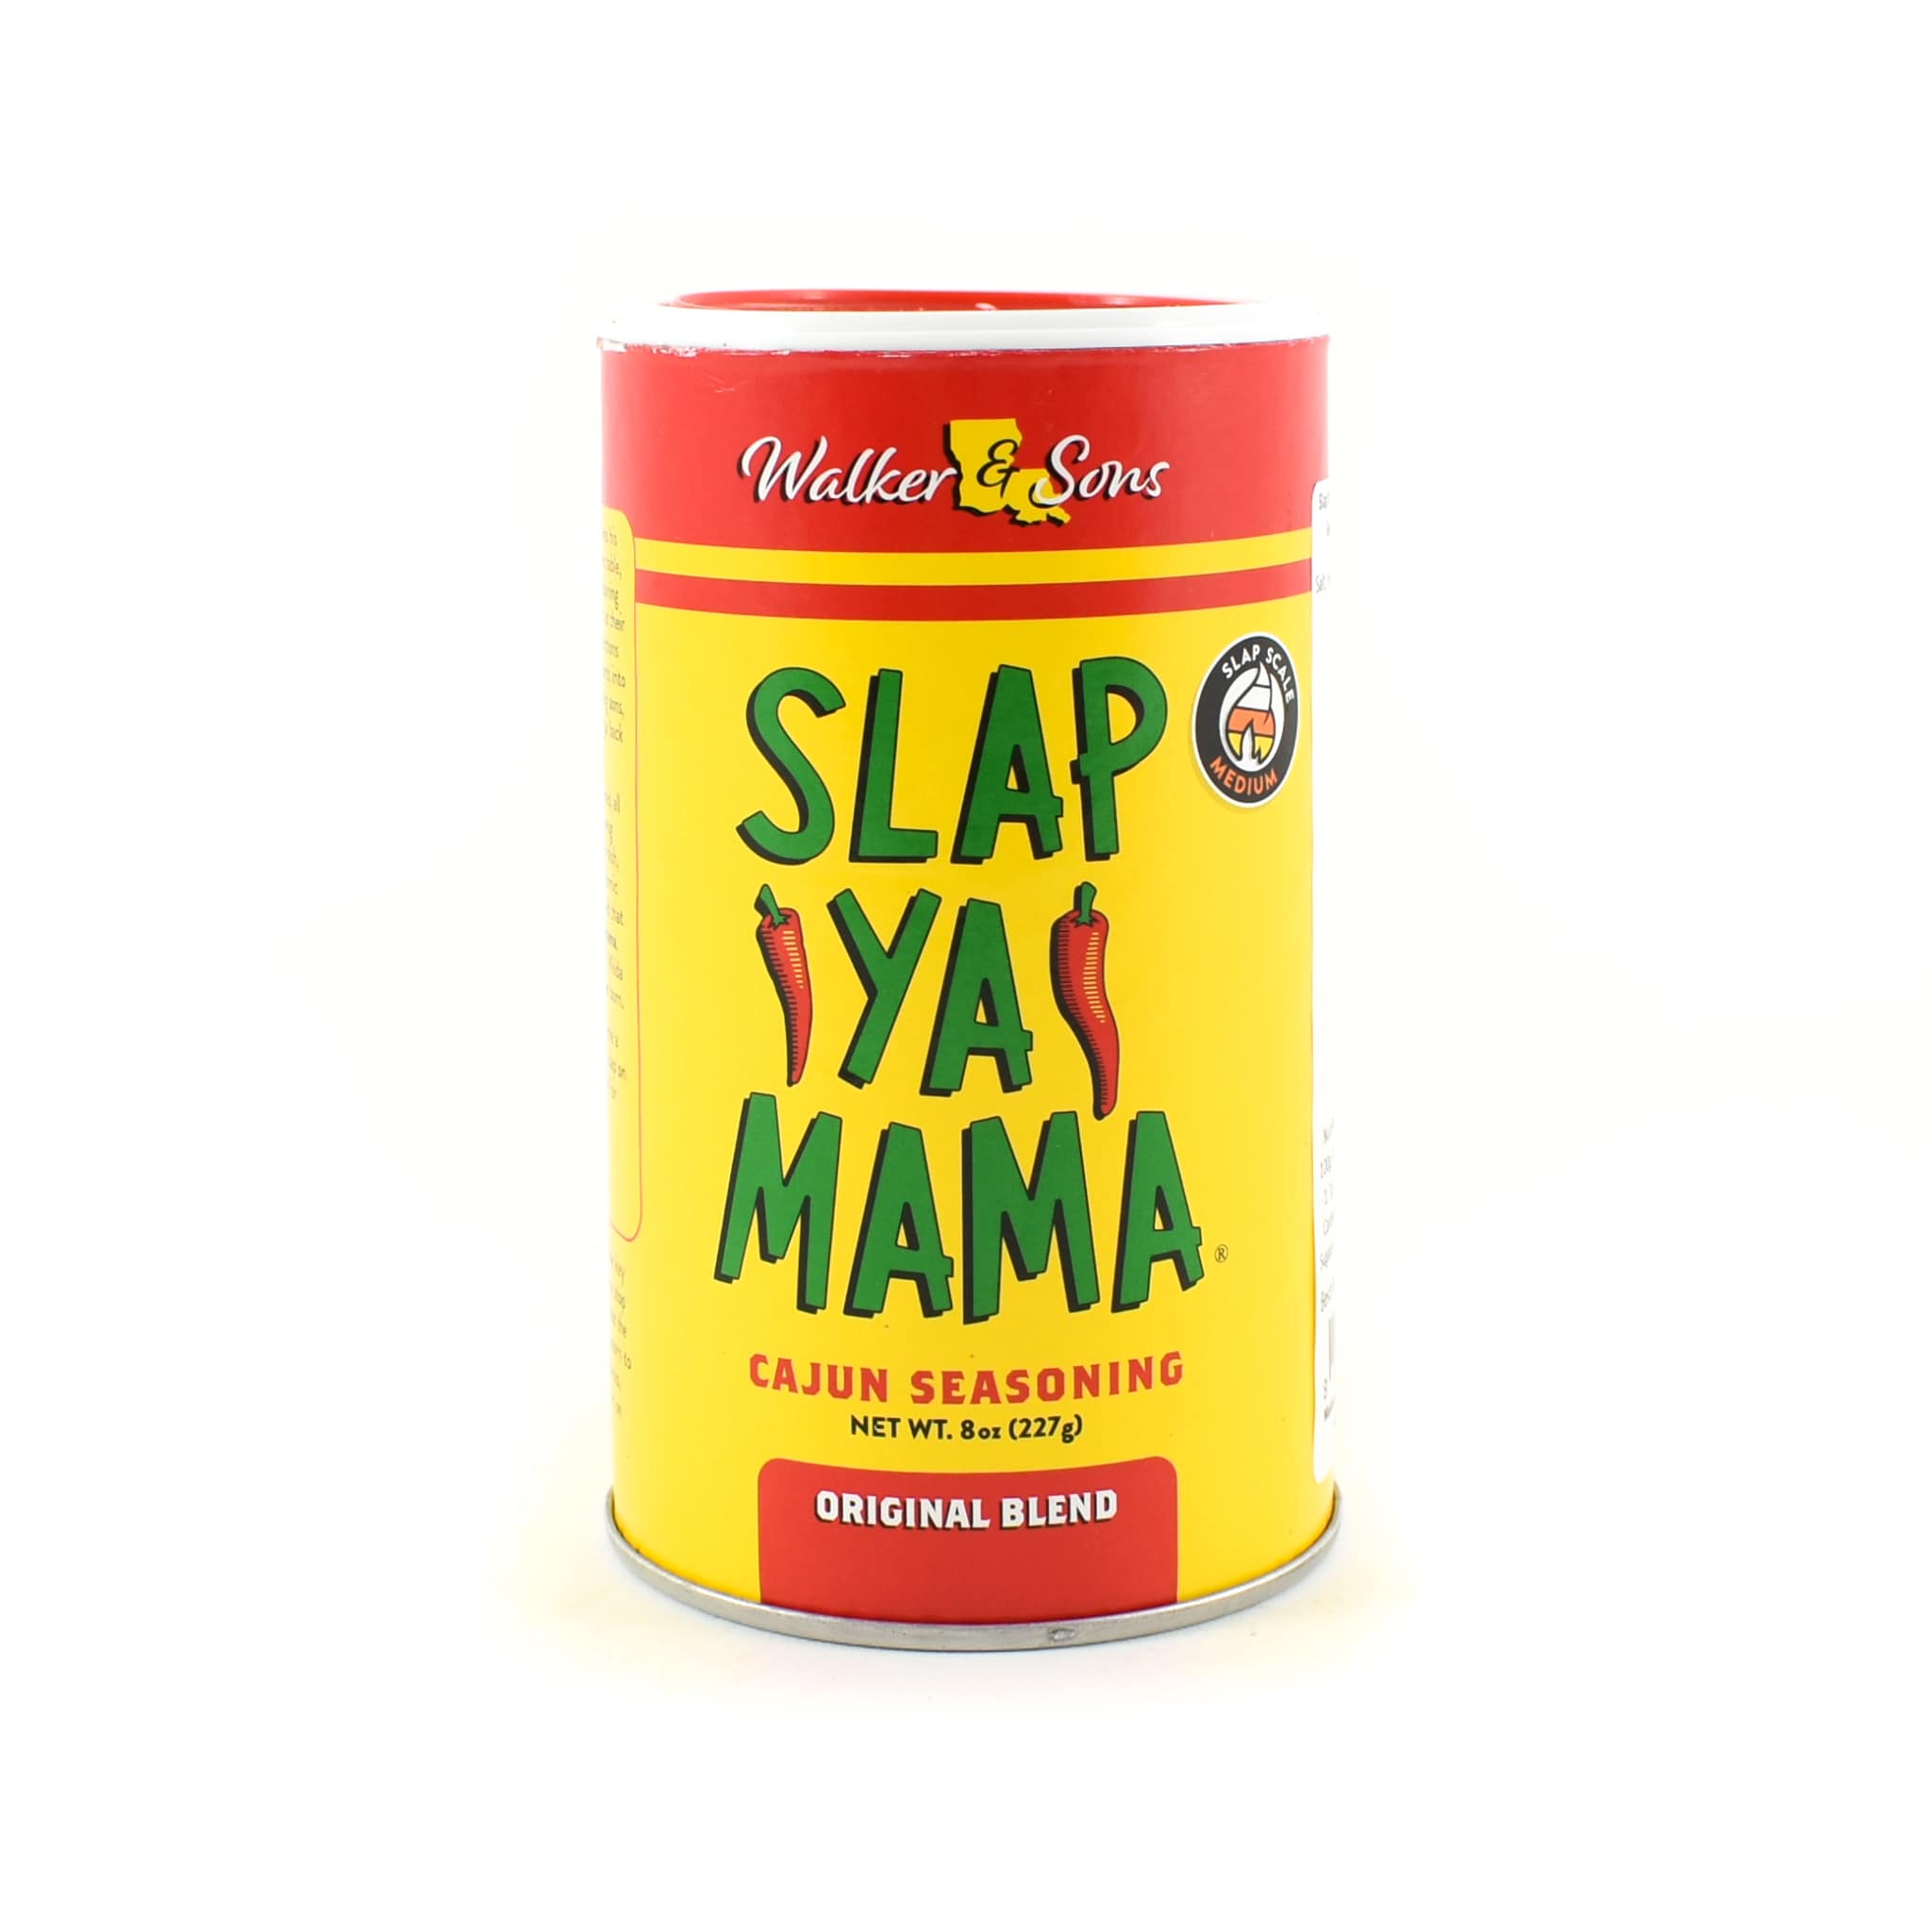 Slap Ya Mama 'Original' Cajun Seasoning, 227g